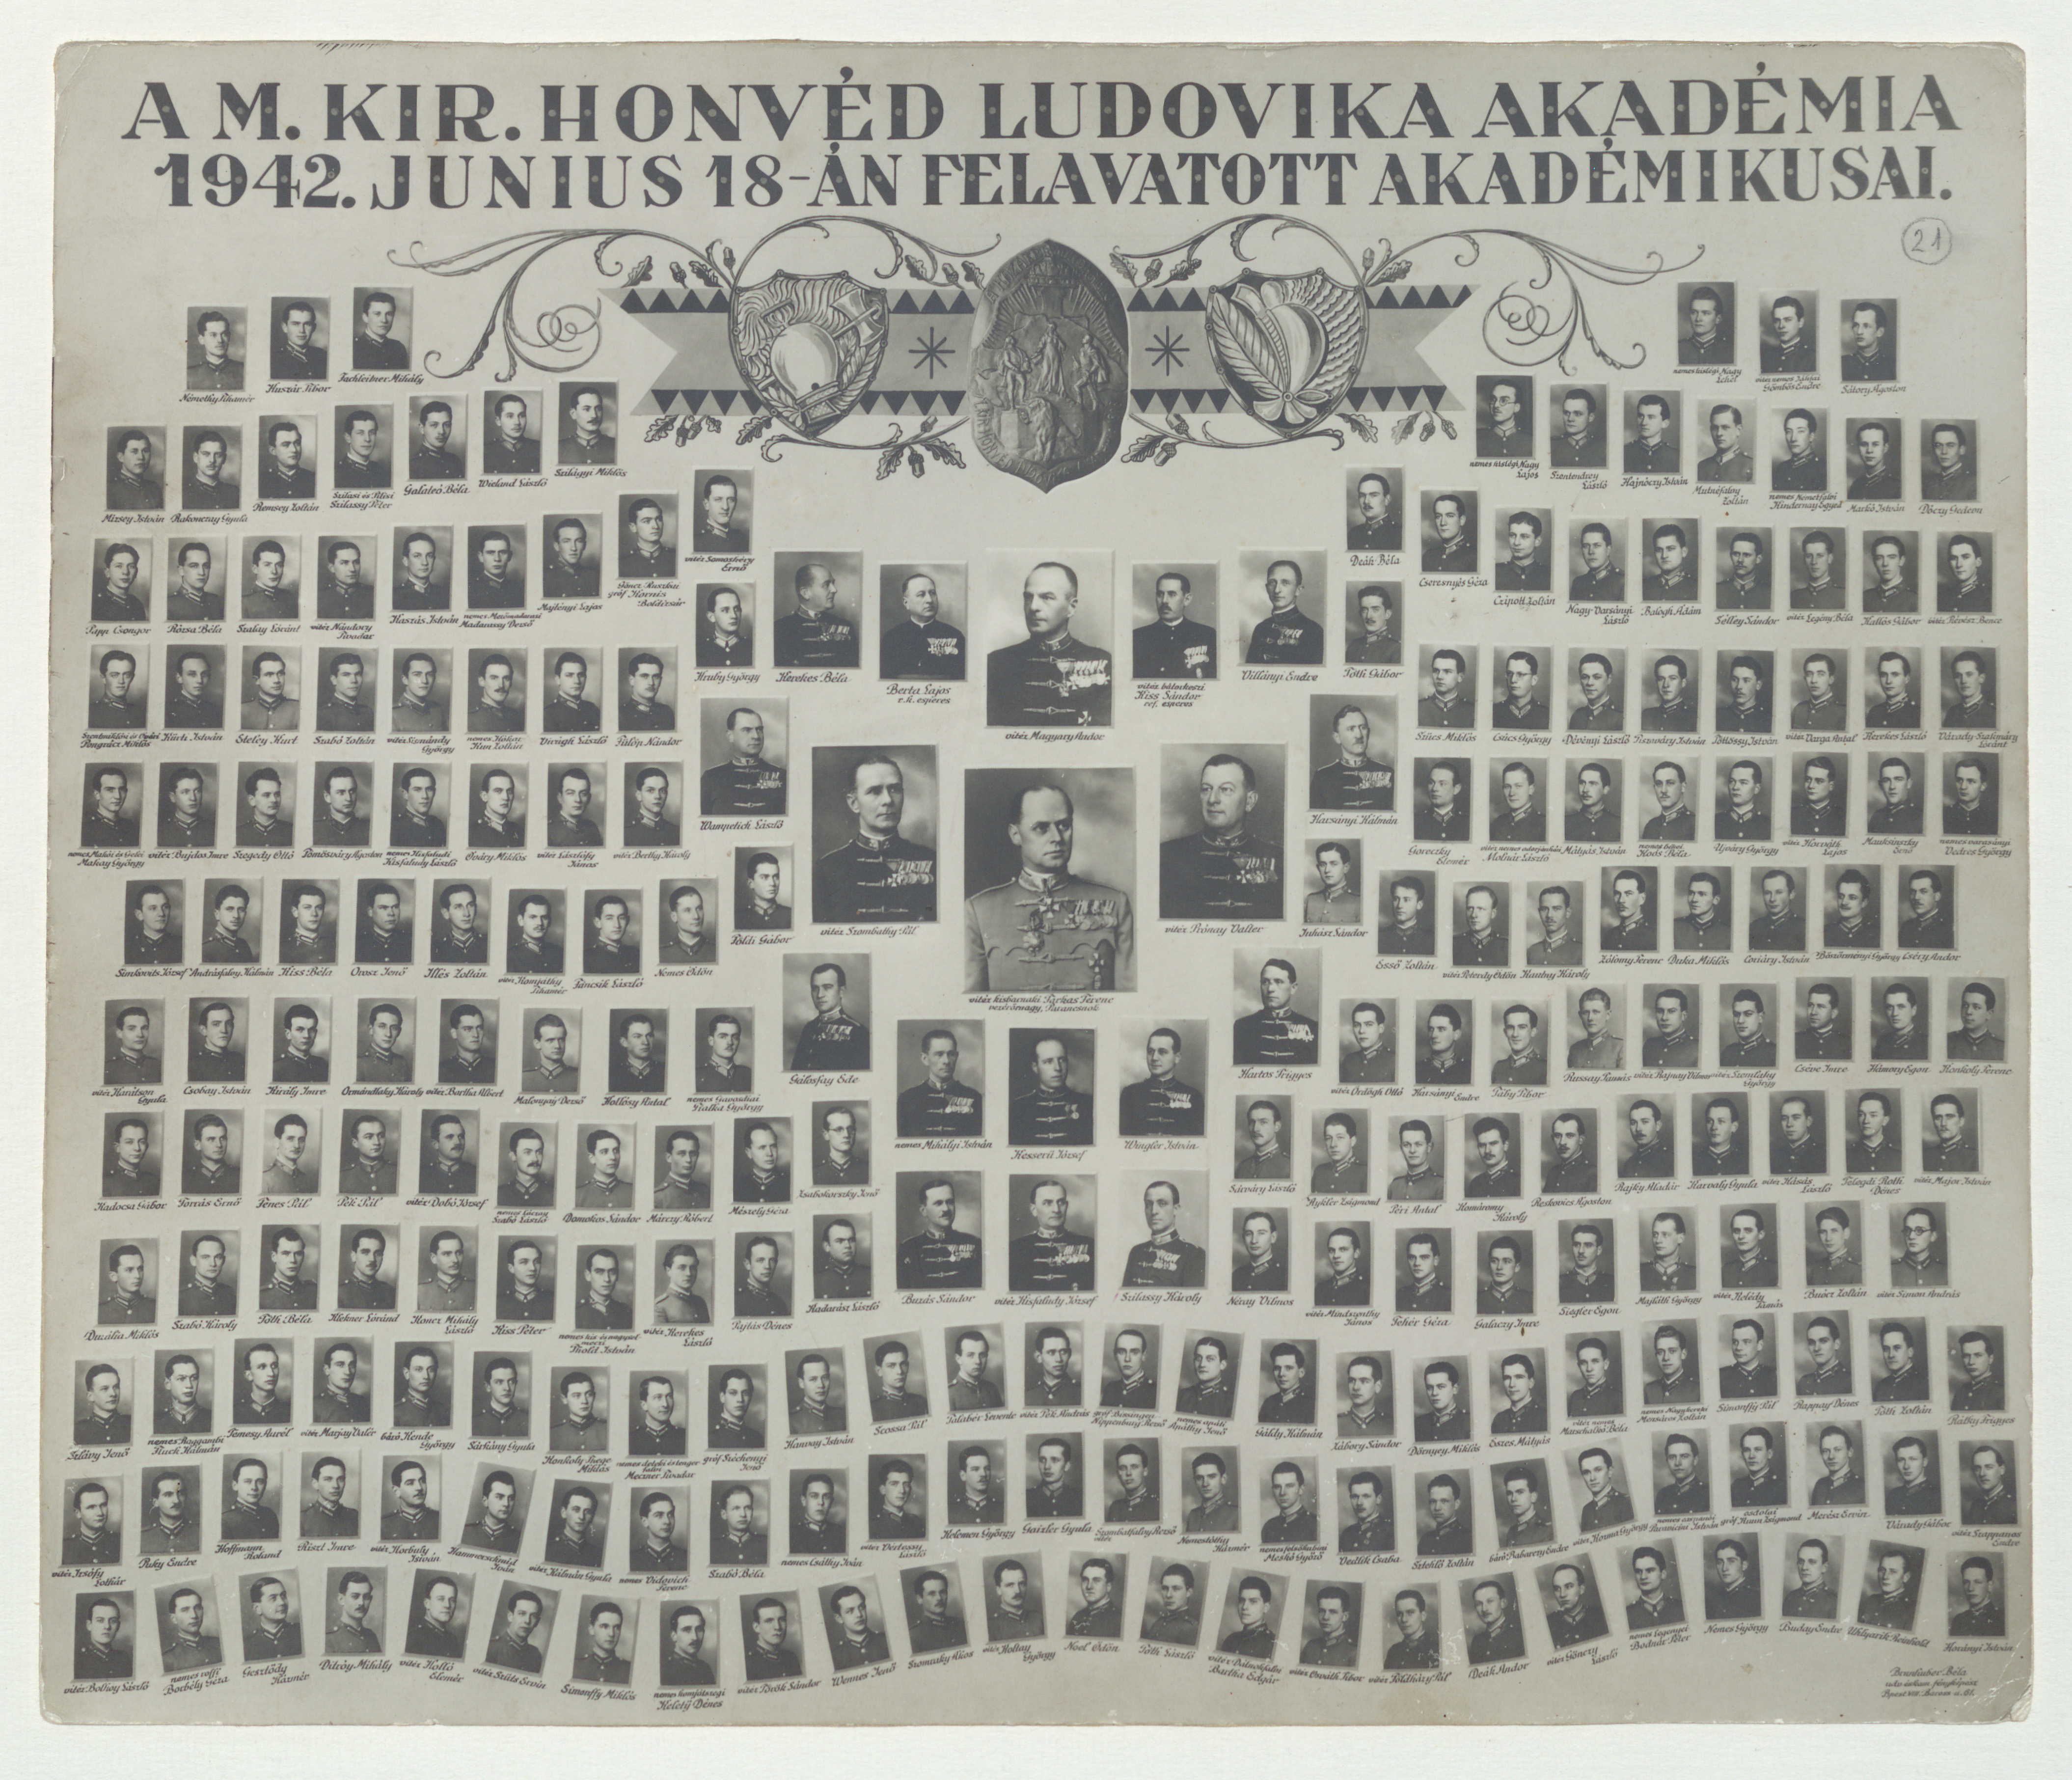 A m. kir. honvéd Ludovika Akadémia 1942. június 18-án felavatott akadémikusai